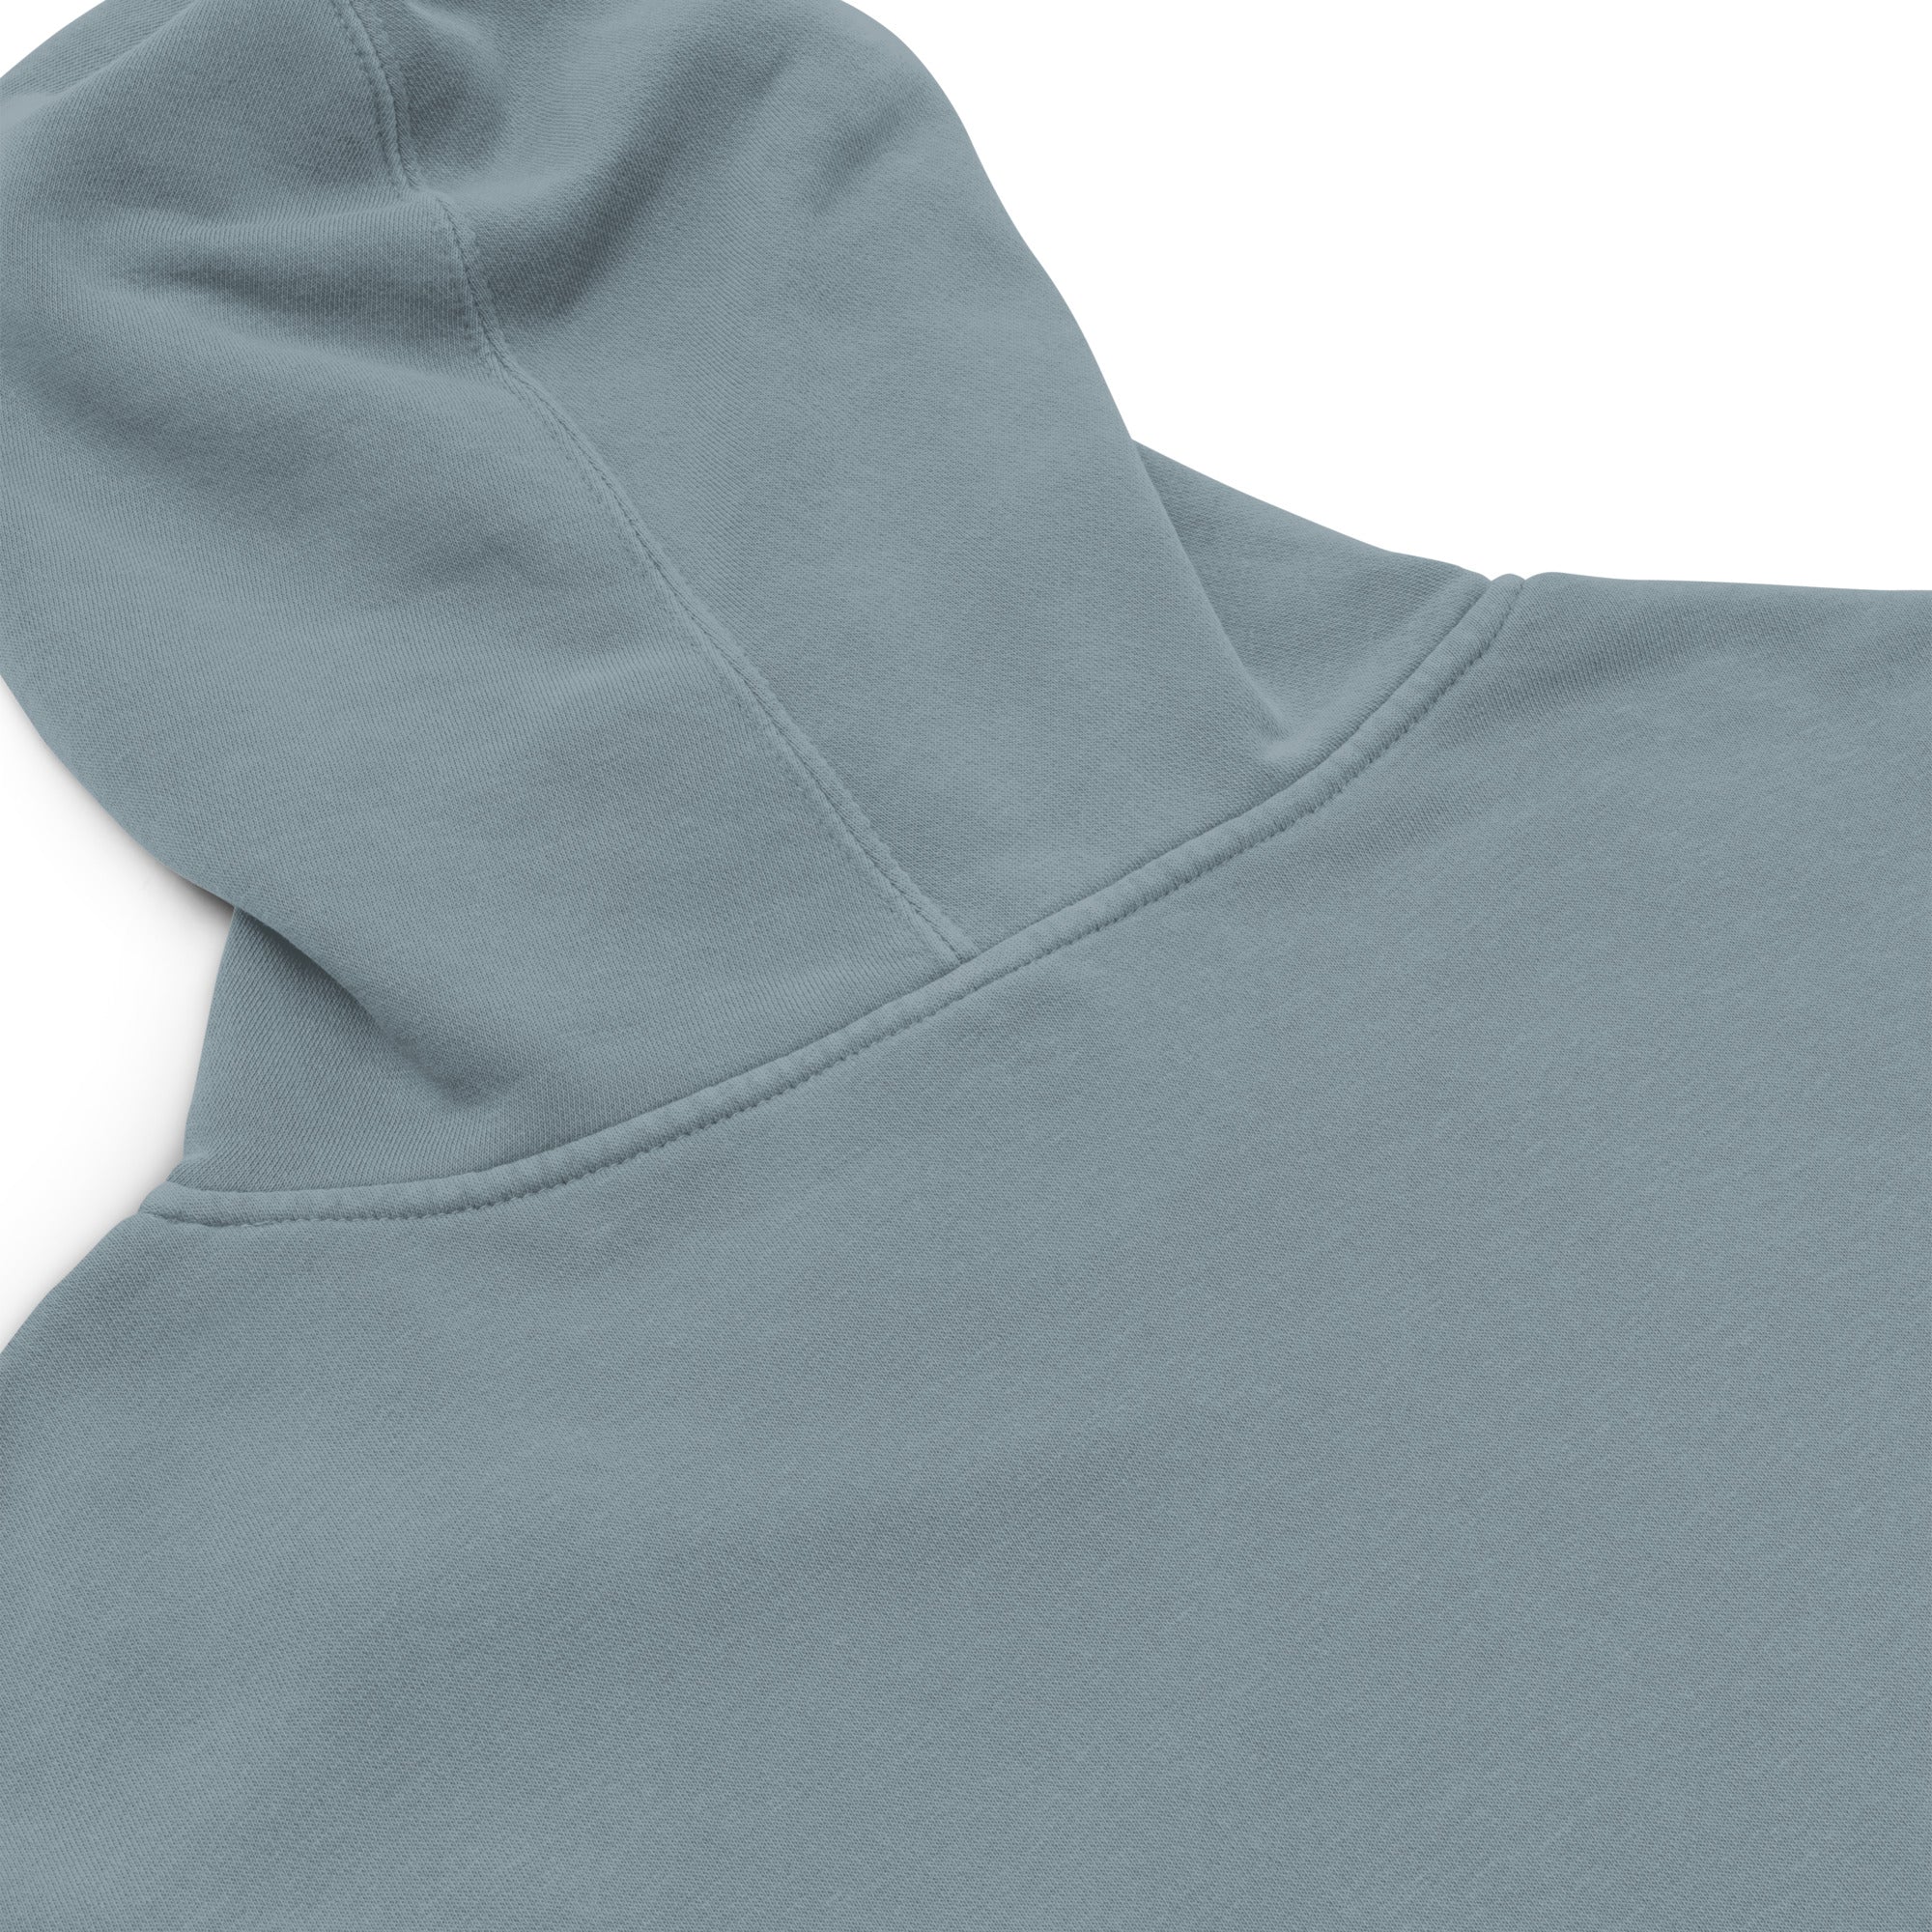 Infinite Hero Unisex pigment-dyed hoodie